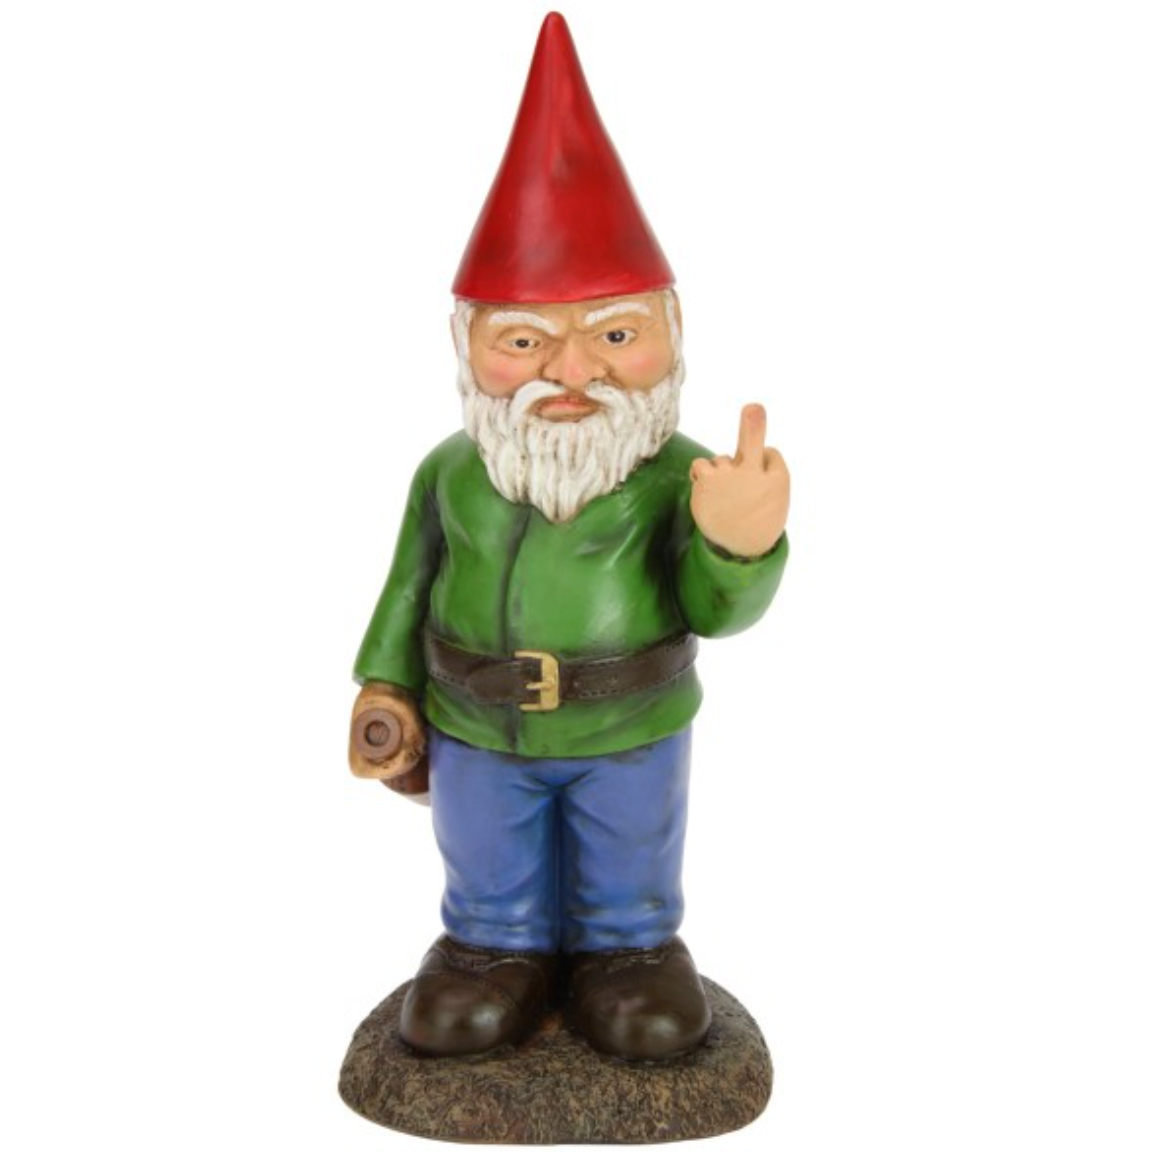 F off rude finger drunk garden gnome